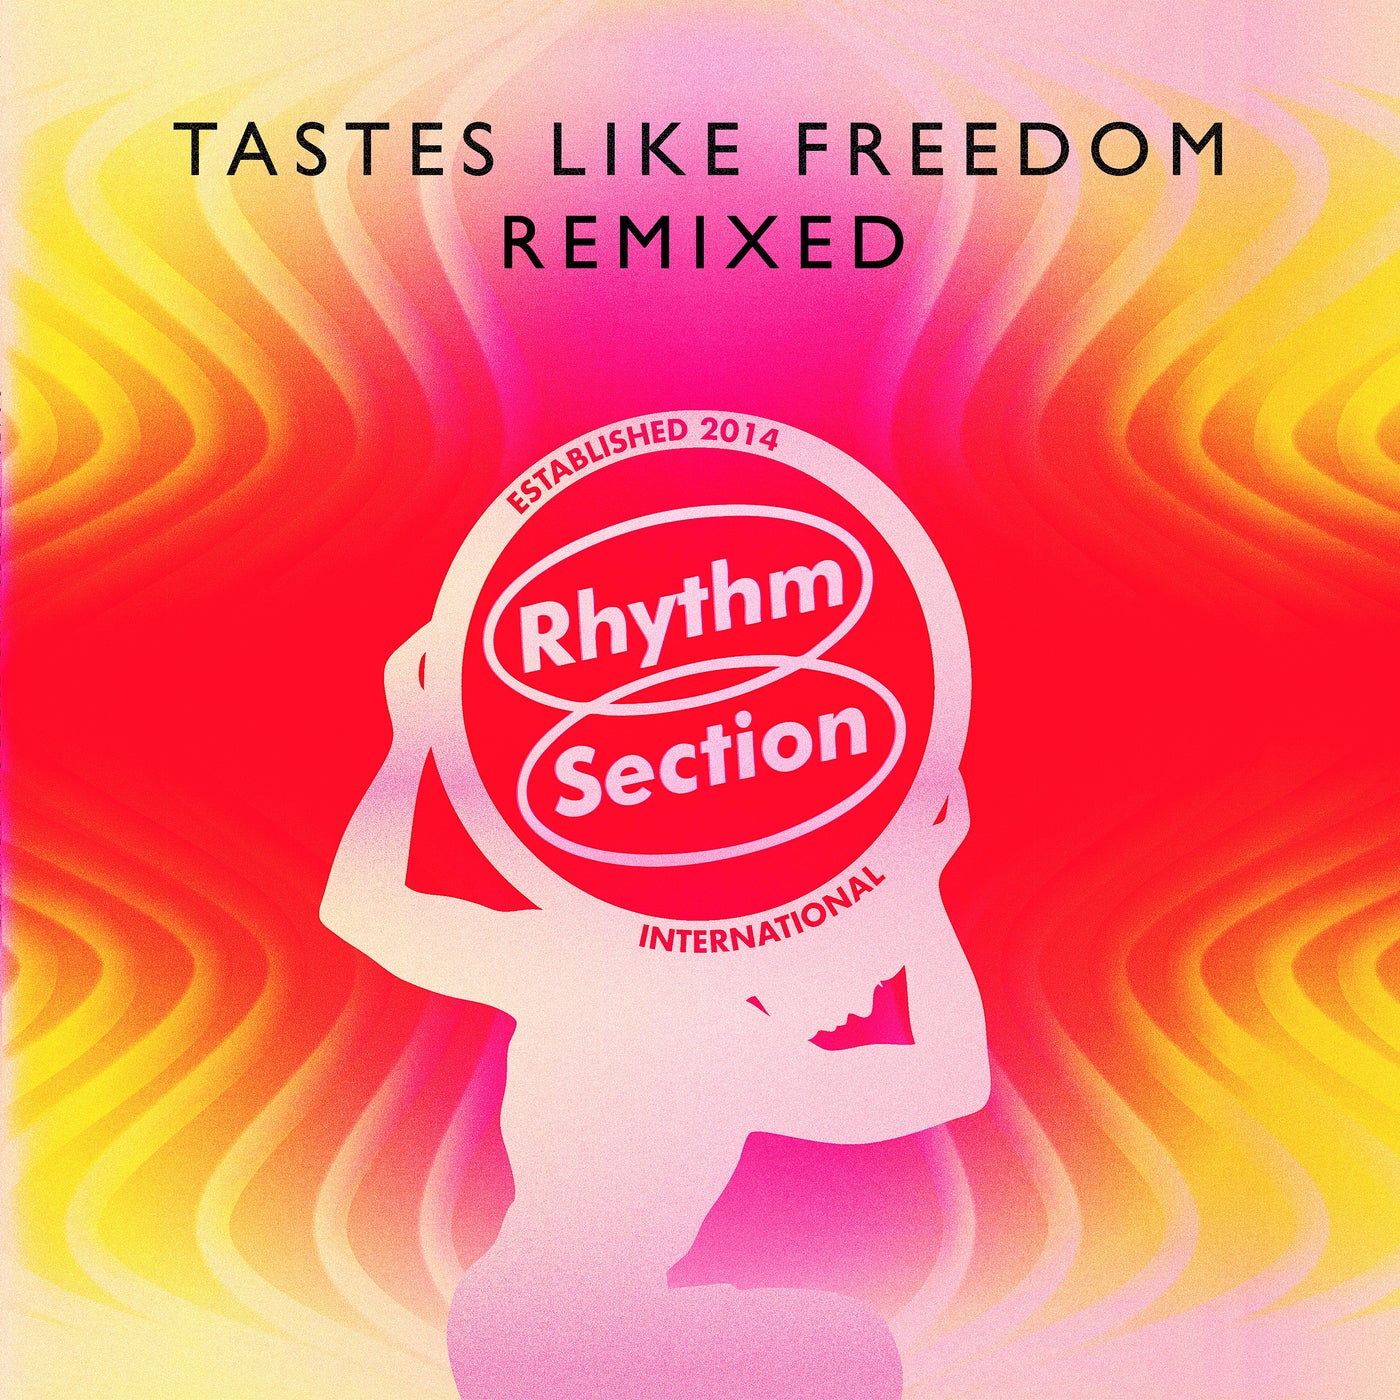 Download 30/70 - Tastes Like Freedom: Remixed on Electrobuzz